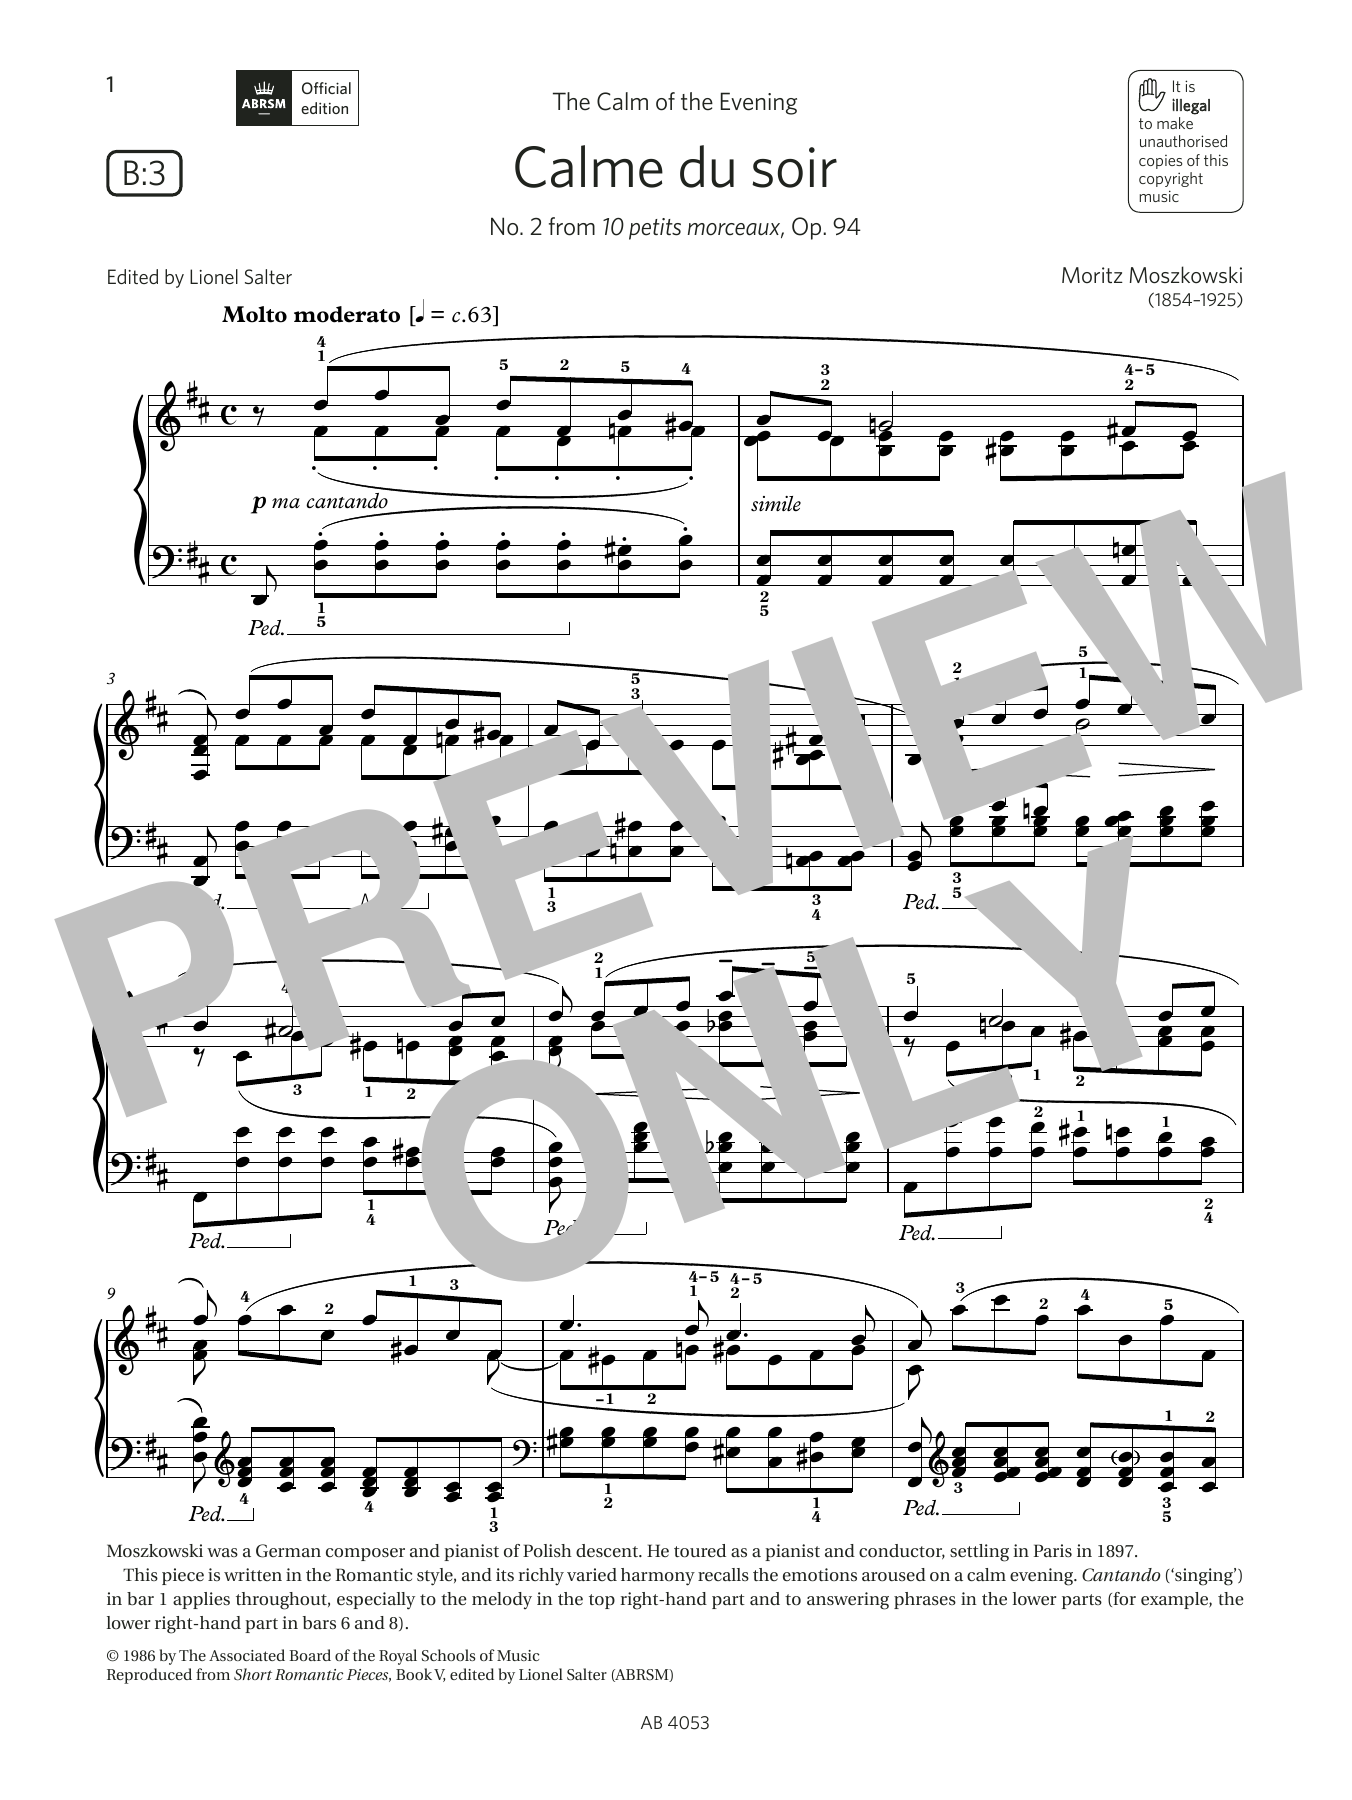 Moritz Moszkowski Calme du soir (Grade 7, list B3, from the ABRSM Piano Syllabus 2023 & 2024) Sheet Music Notes & Chords for Piano Solo - Download or Print PDF